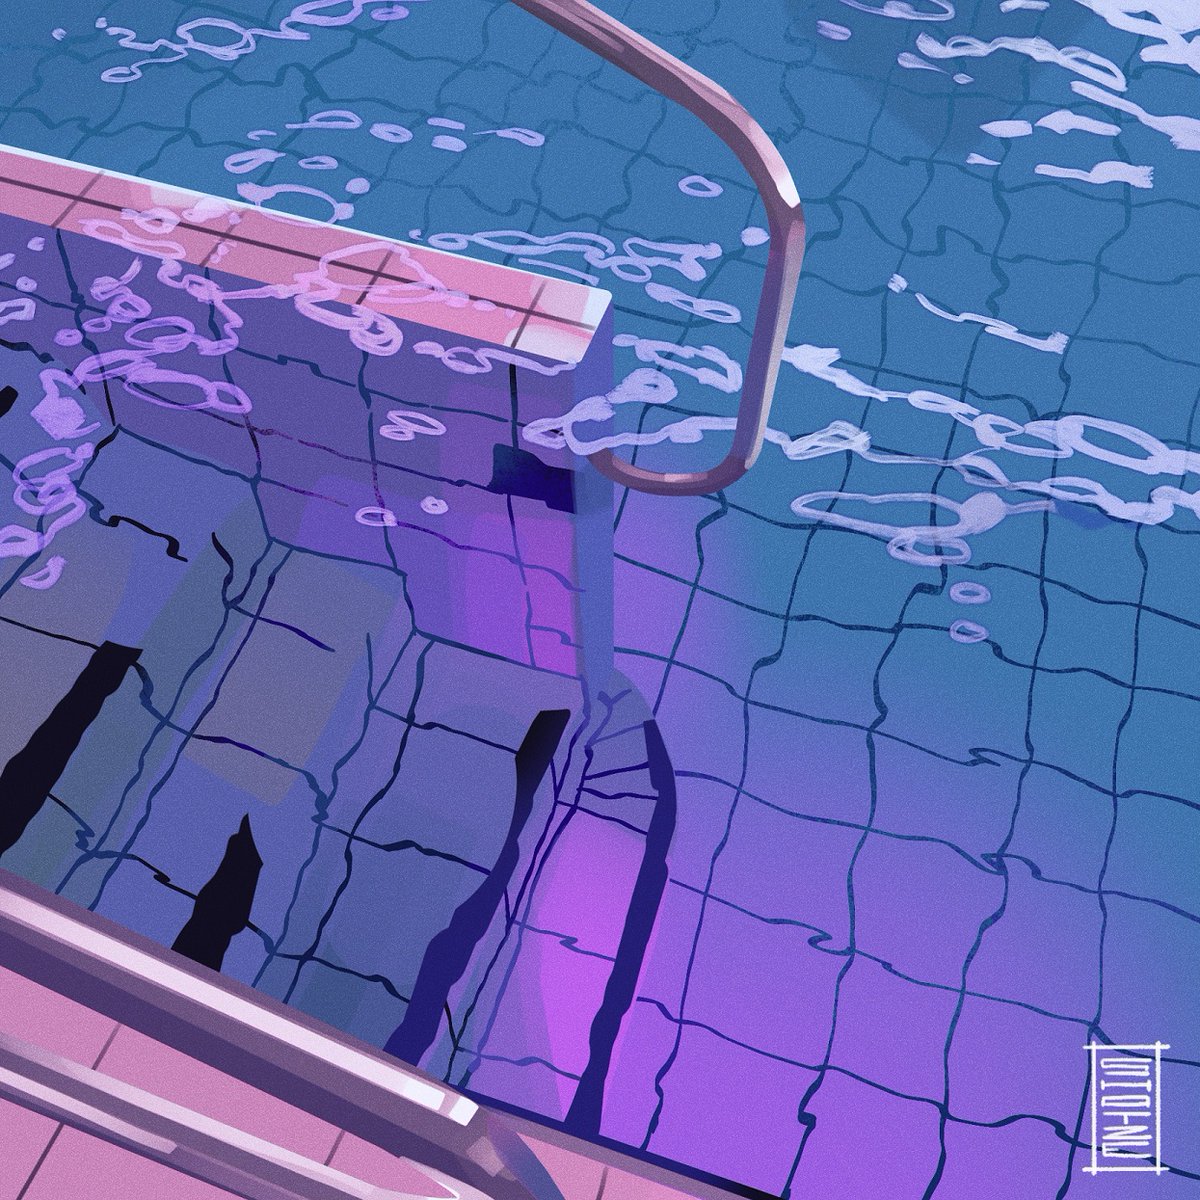 no humans pool ladder tiles tile floor shadow pool scenery  illustration images